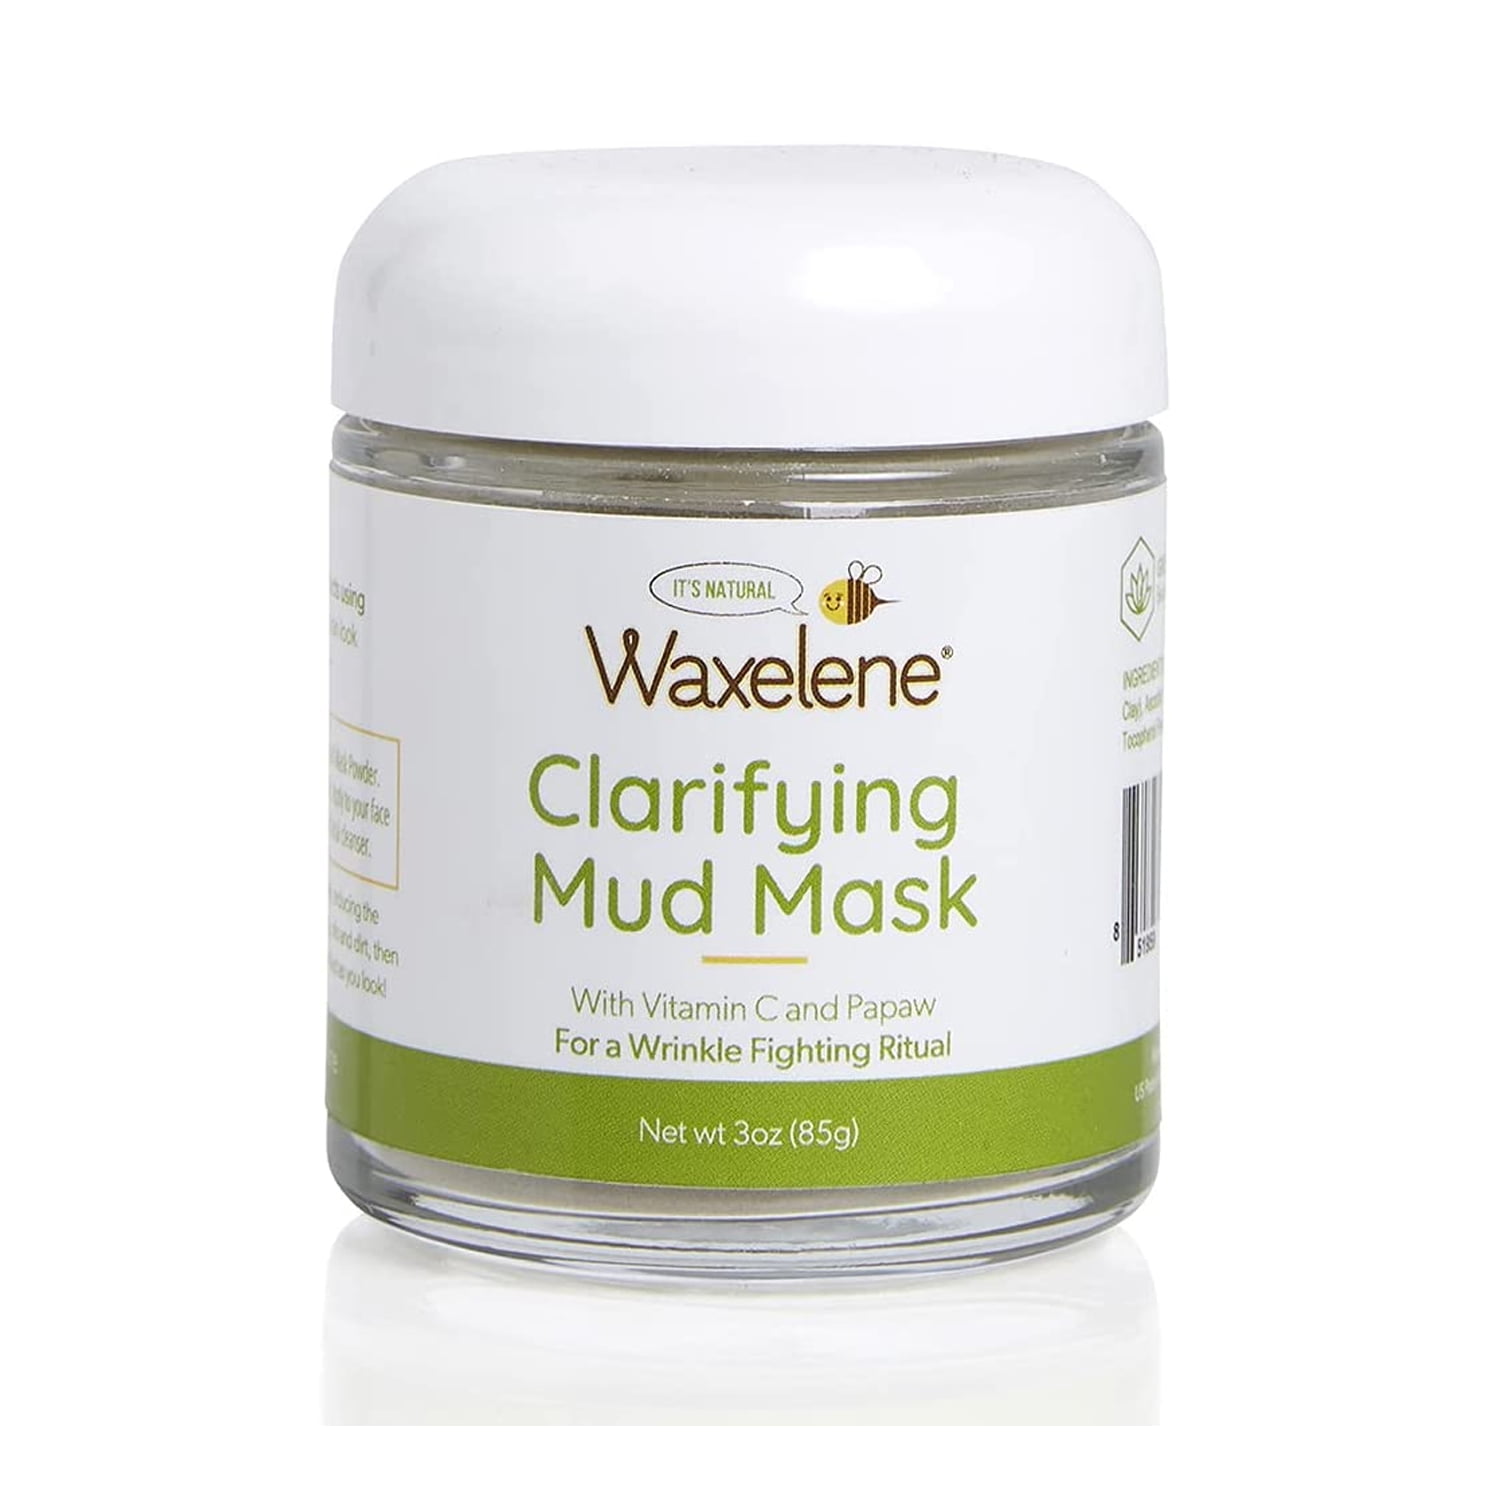 Waxelene Clarifying Mud Mask with Vitamin C and Papaw 3 oz, Pack of 6